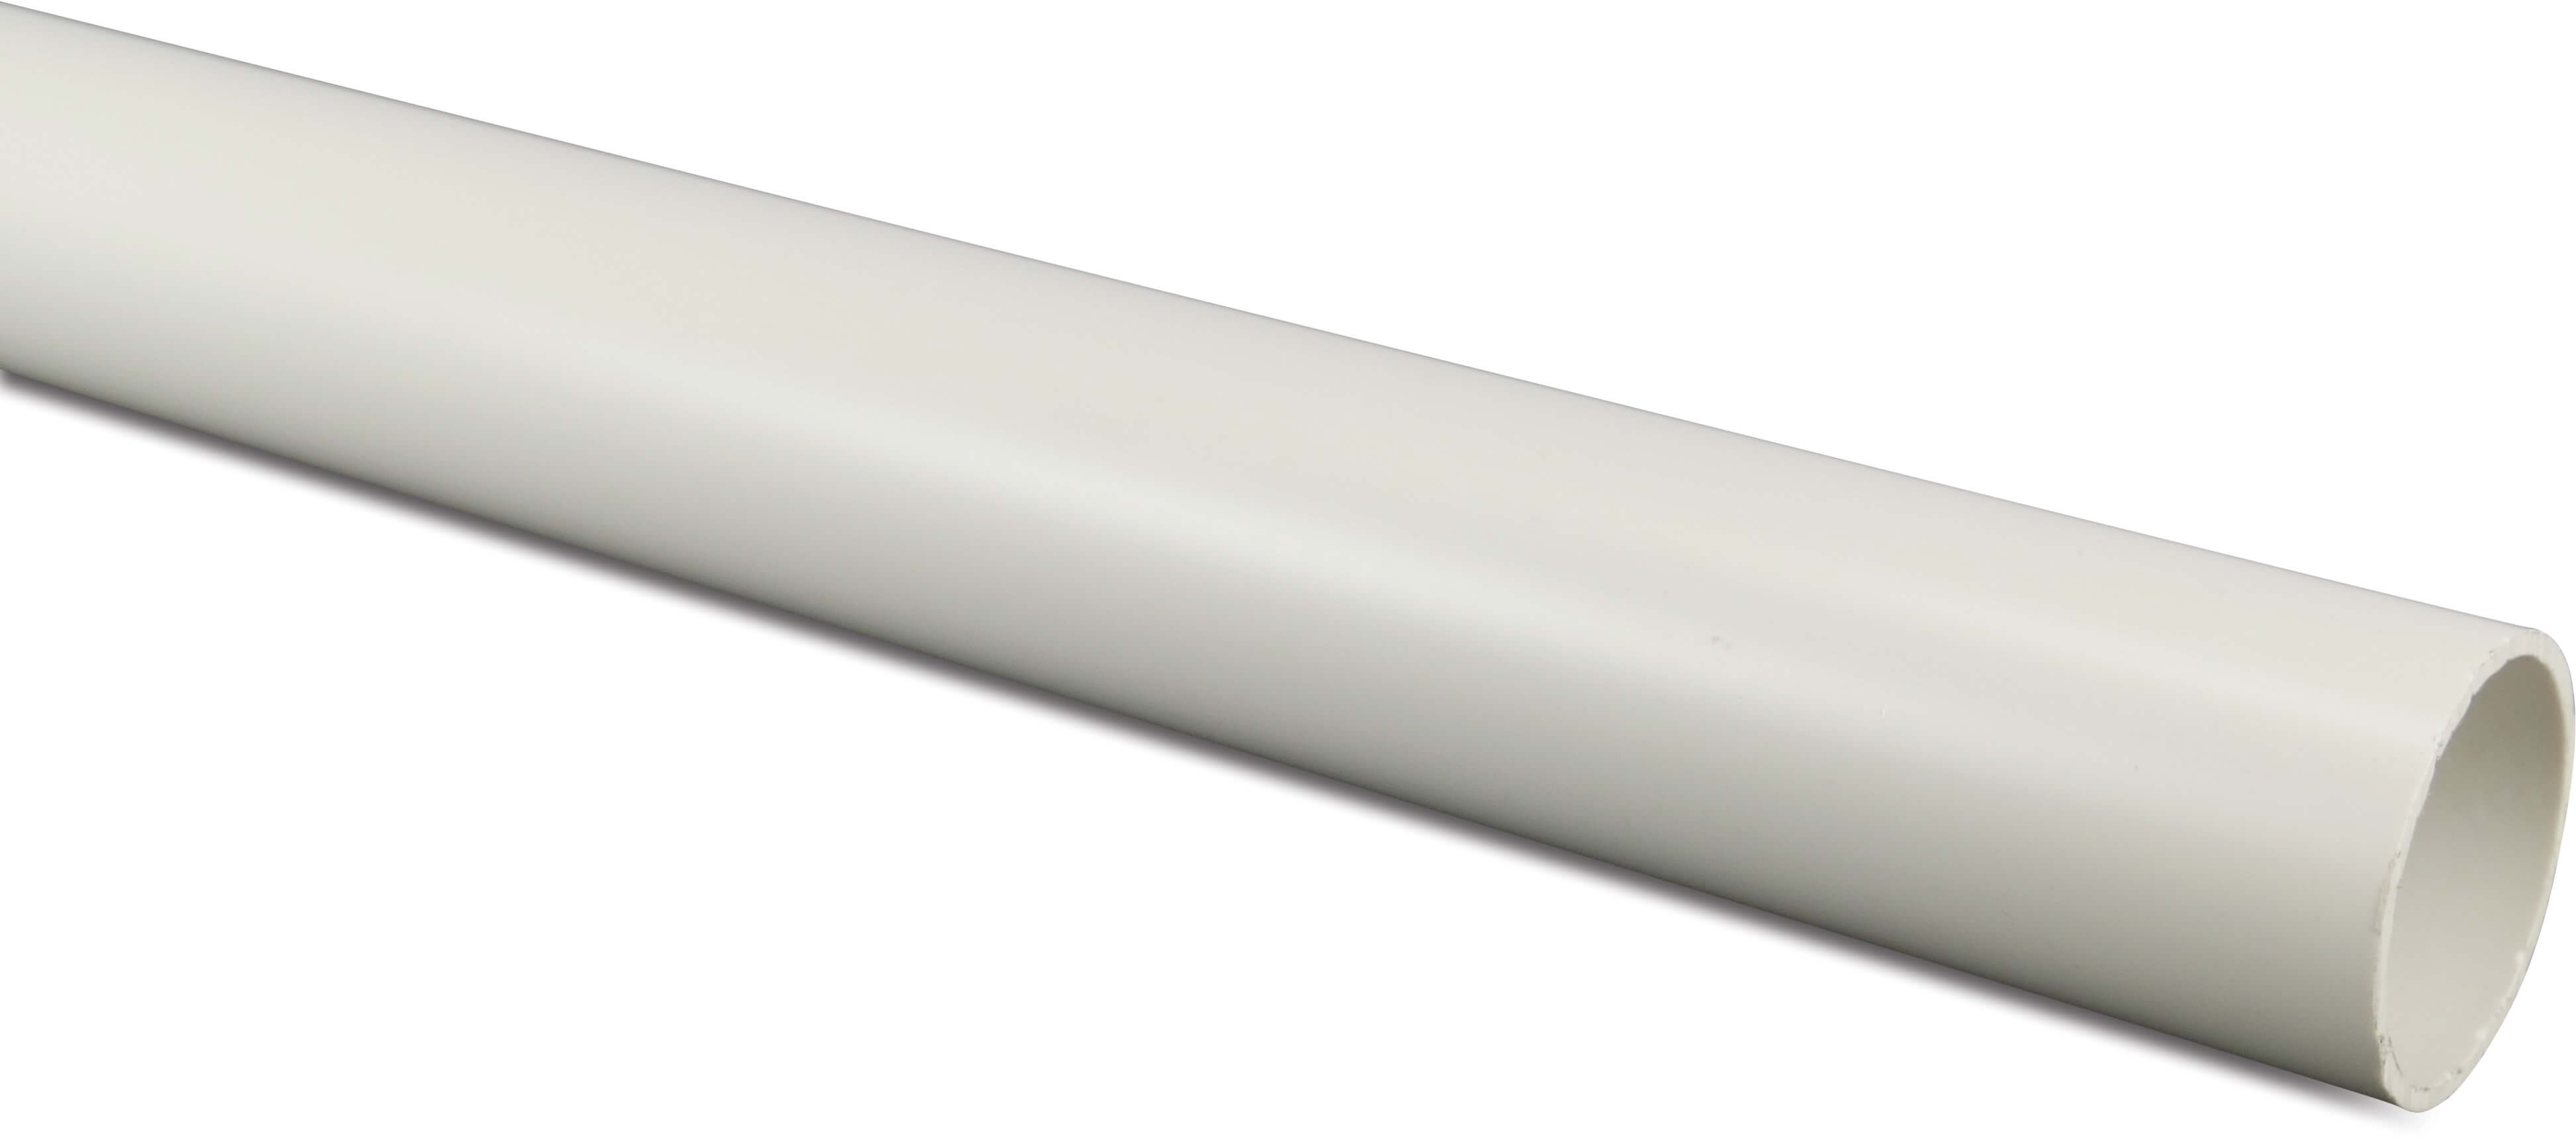 Rura ciśnieniowa PVC-U 1 1/2" x 2,5 mm gładkie Class D-PN12 biały 2m